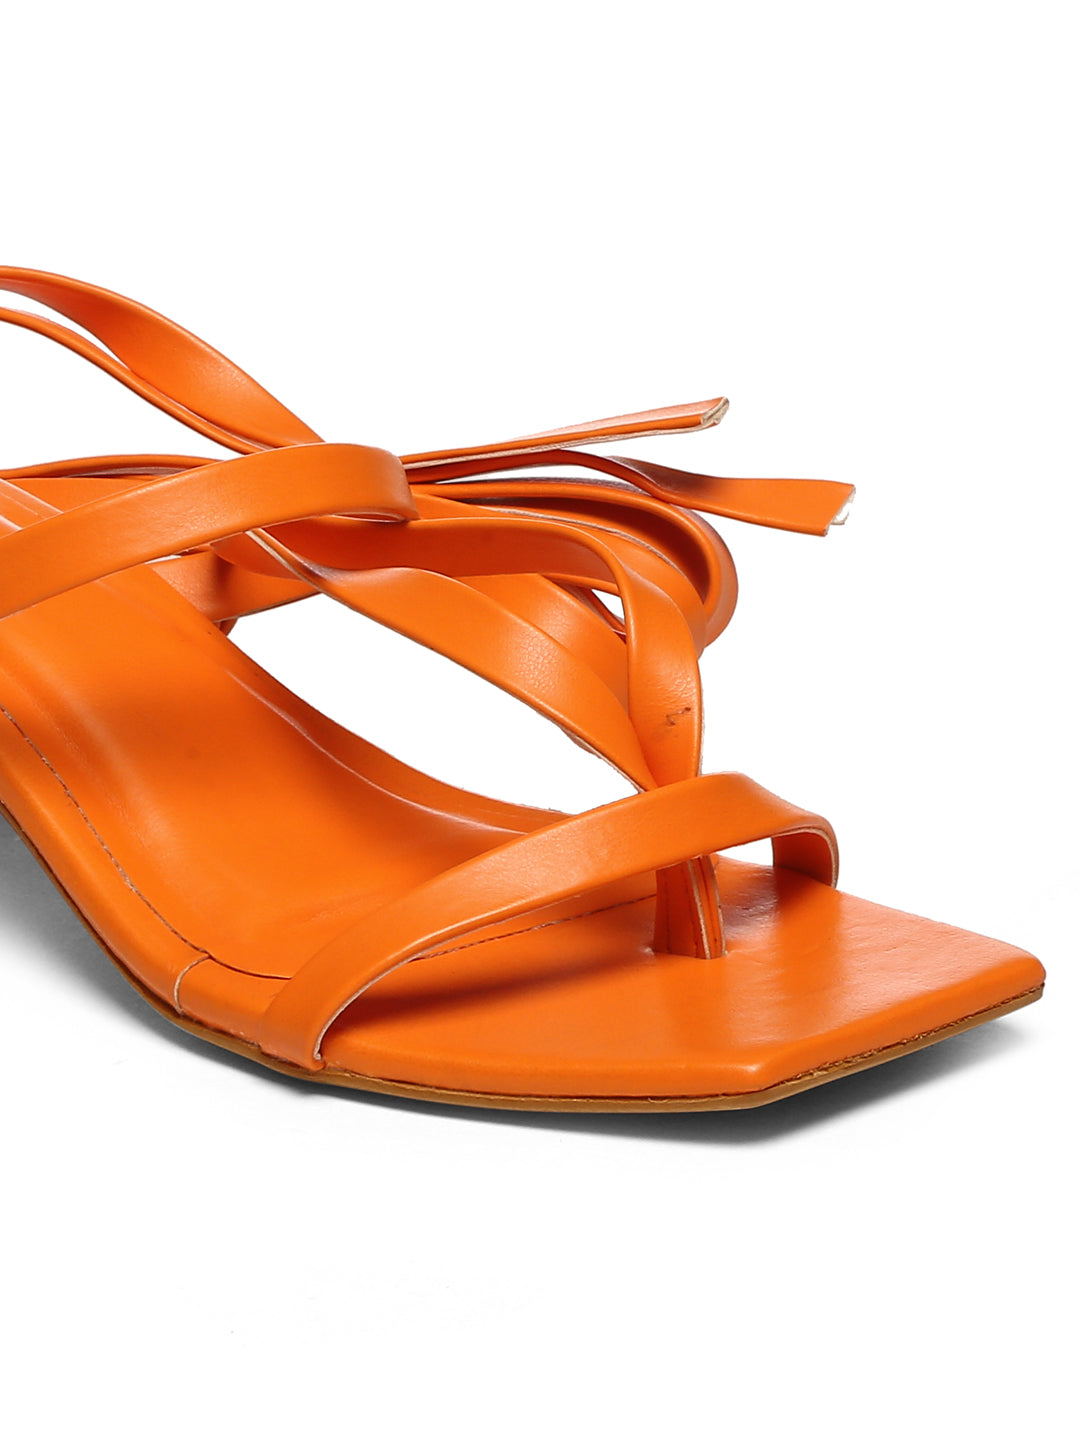 GNIST Orange Strappy Block Heel Sandal